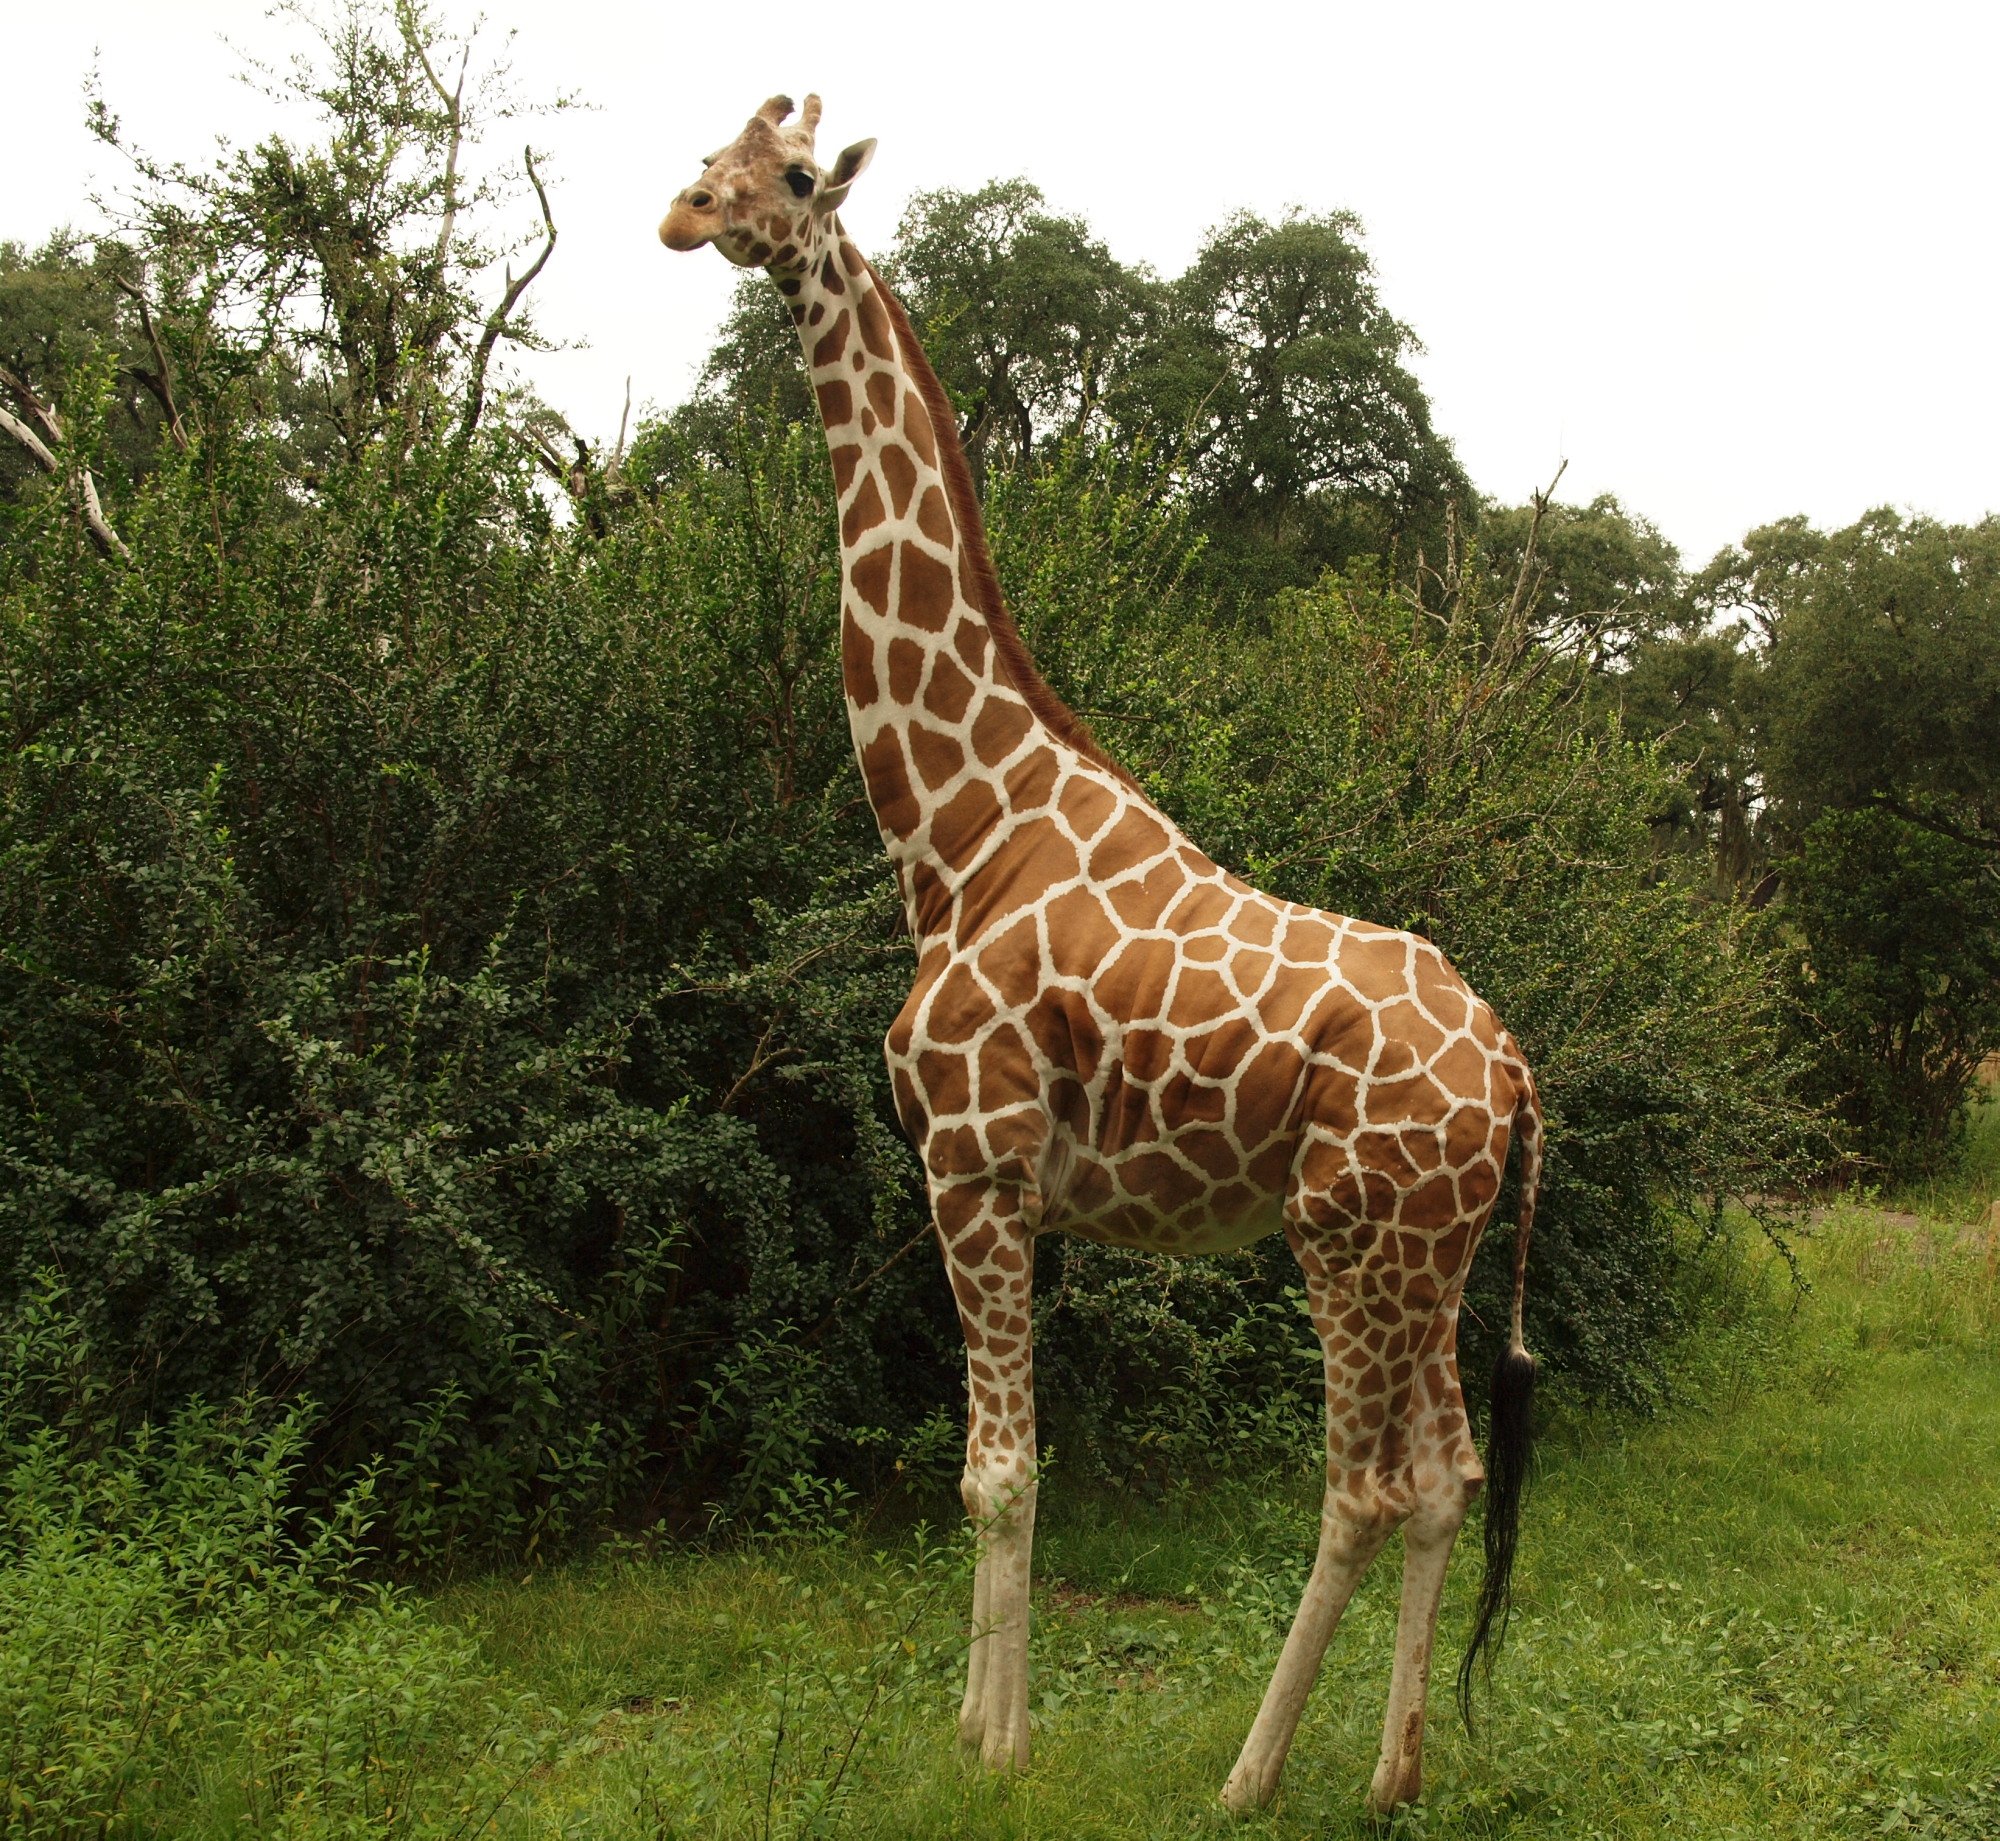 Animal Kingdom - Kilimanjaro Safaris - Giraffe